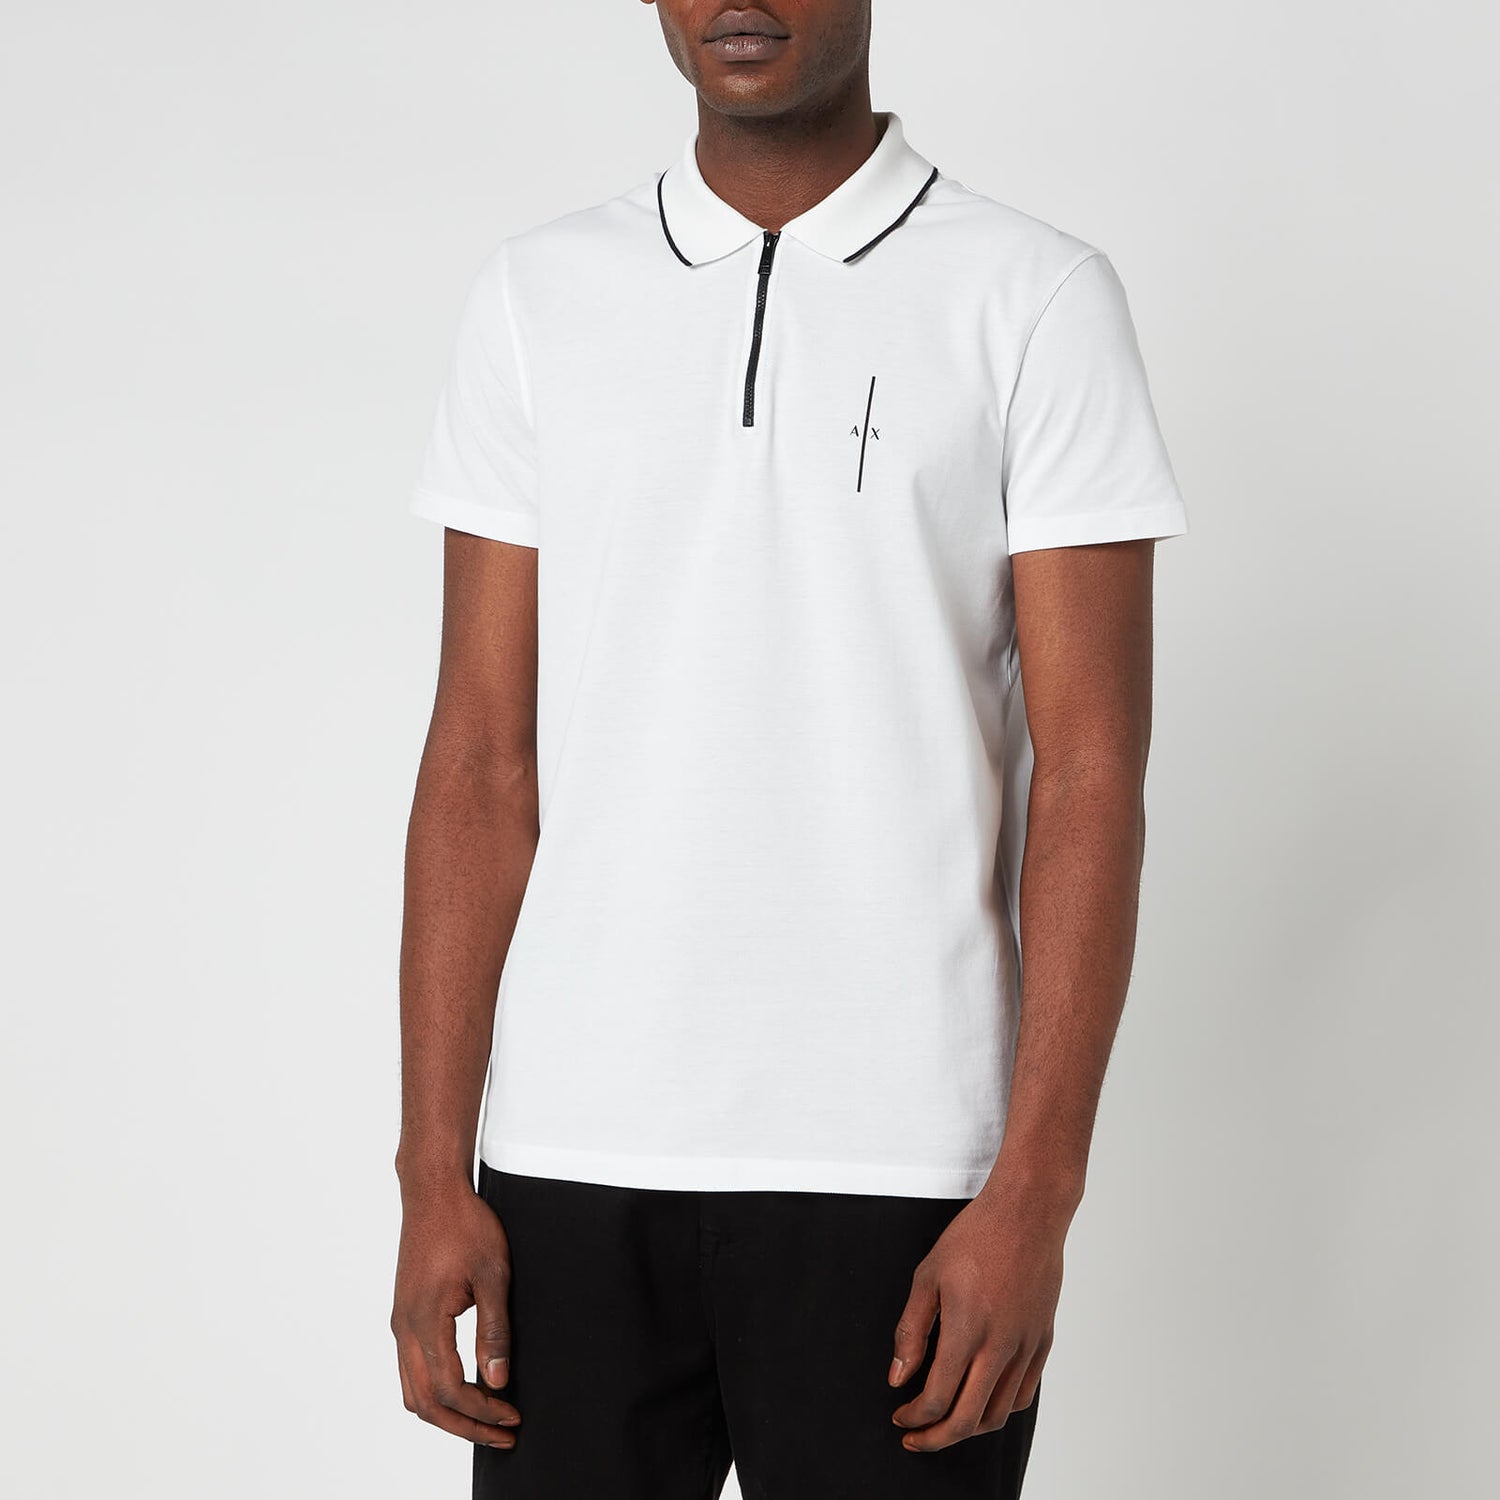 Armani Exchange Men's Organic Cotton Half Zip Polo Shirt - White